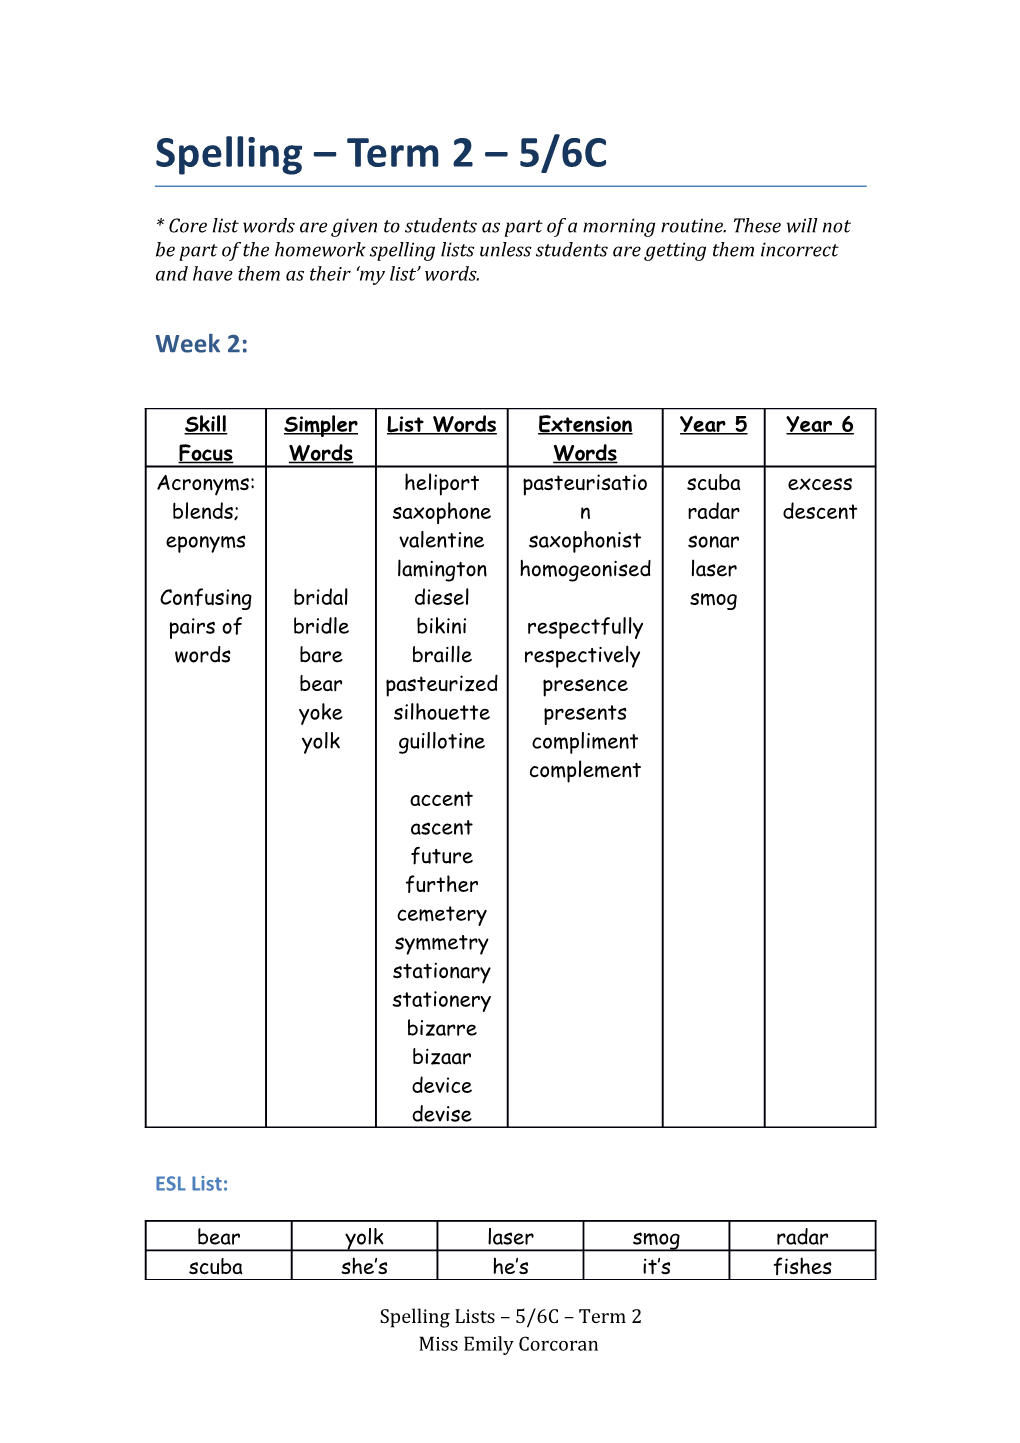 Spelling Lists 5/6C Term 2